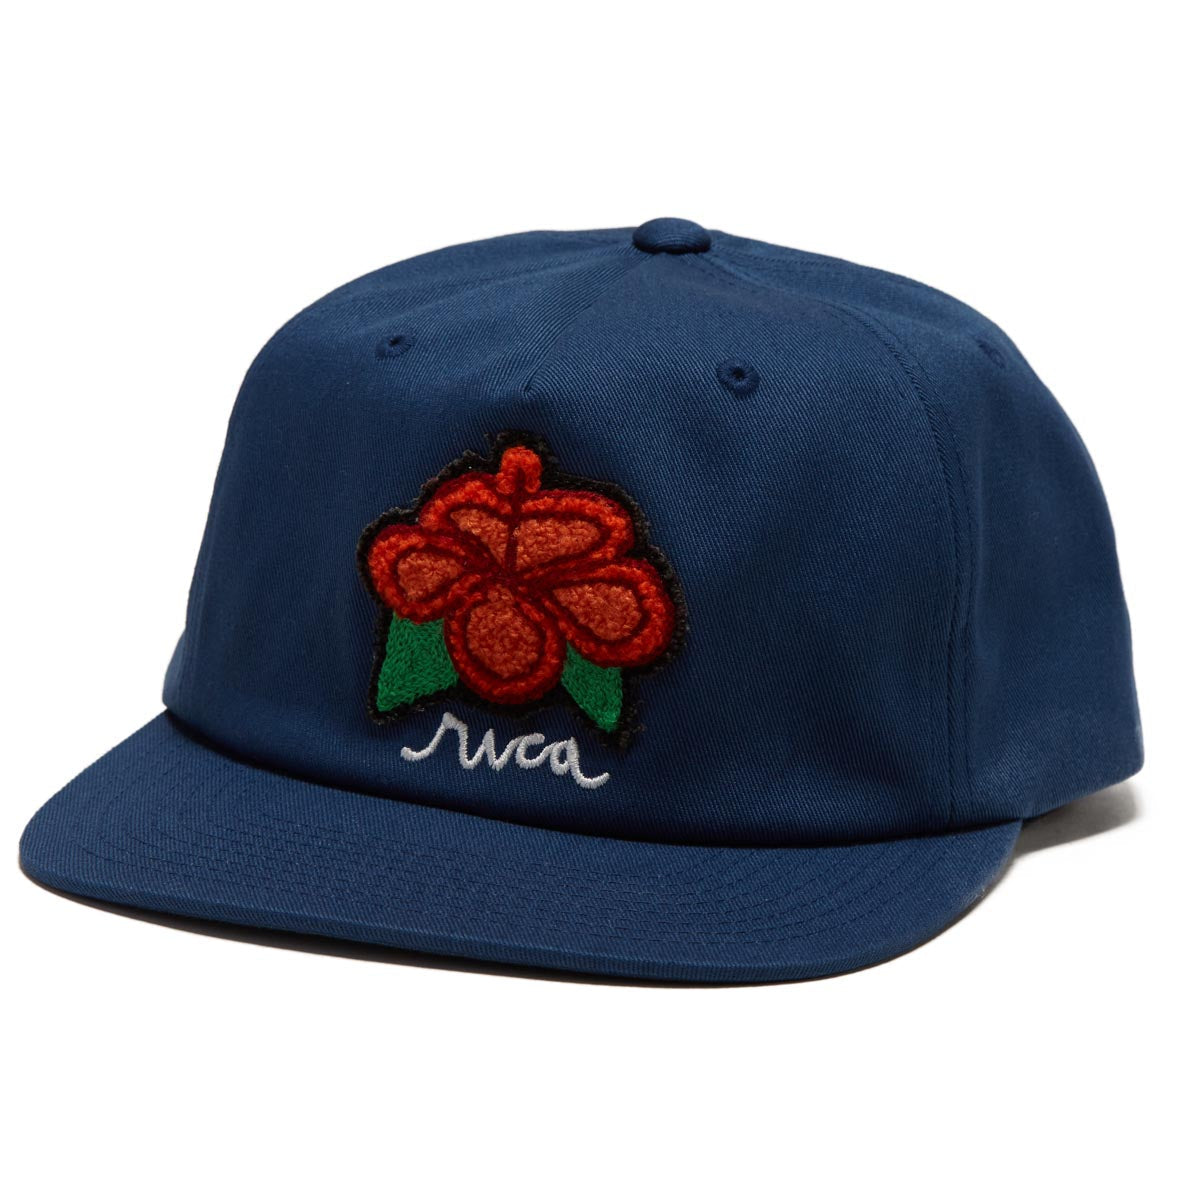 RVCA Oblow Snapback Hat - Slate Blue image 1